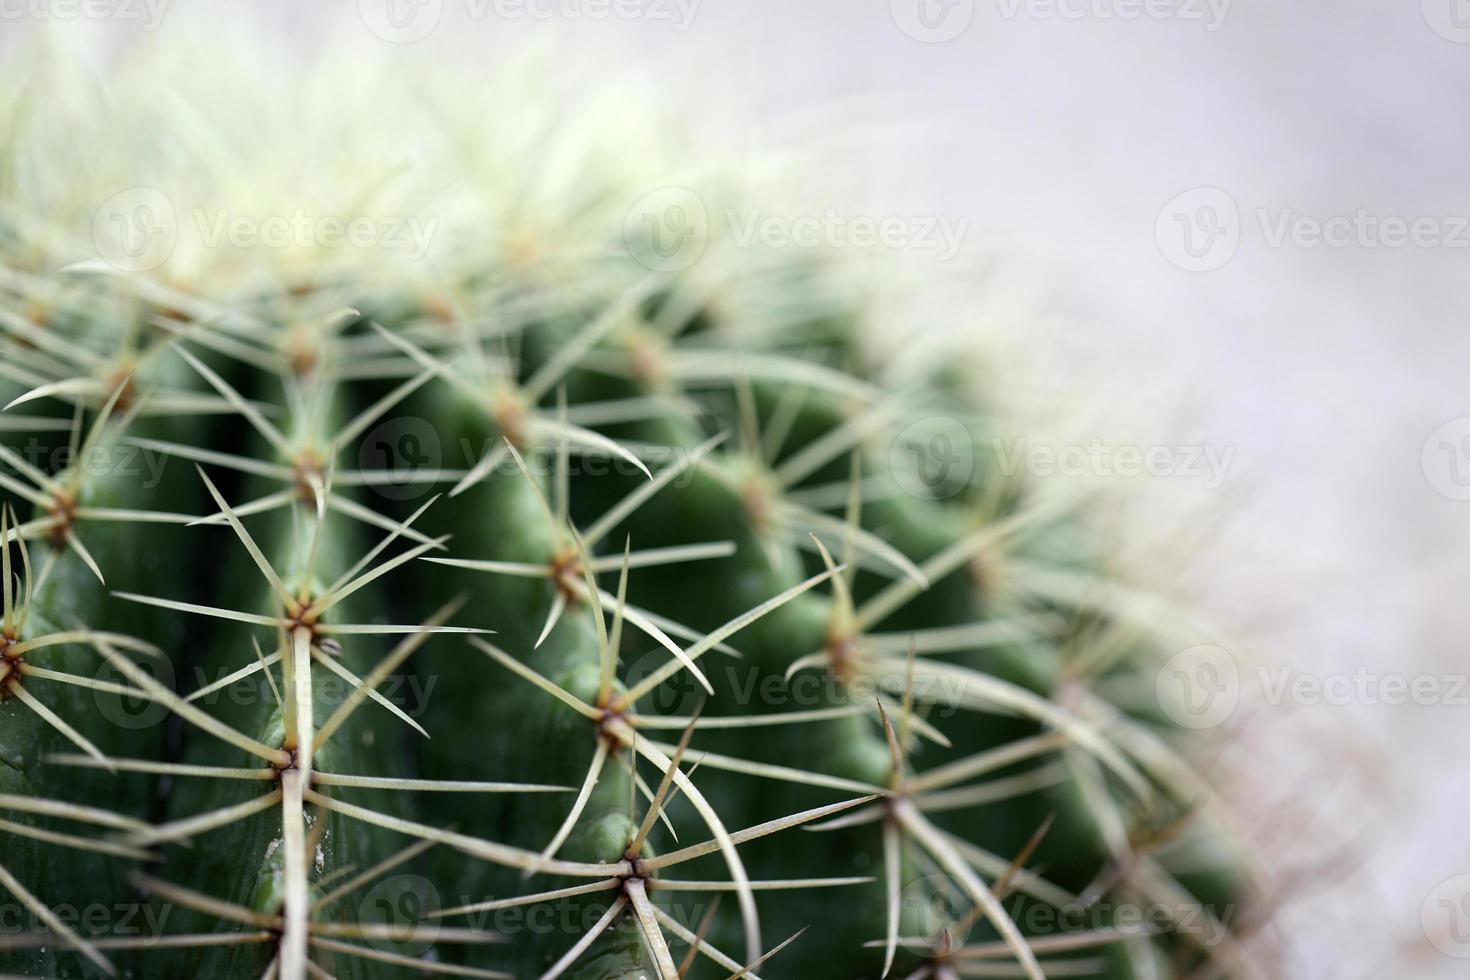 macro de cactus photo